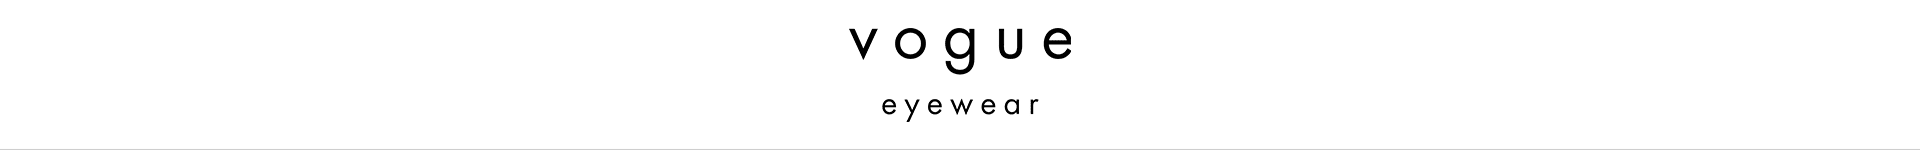 Shop Vogue Eyeglasses & Sunglasses